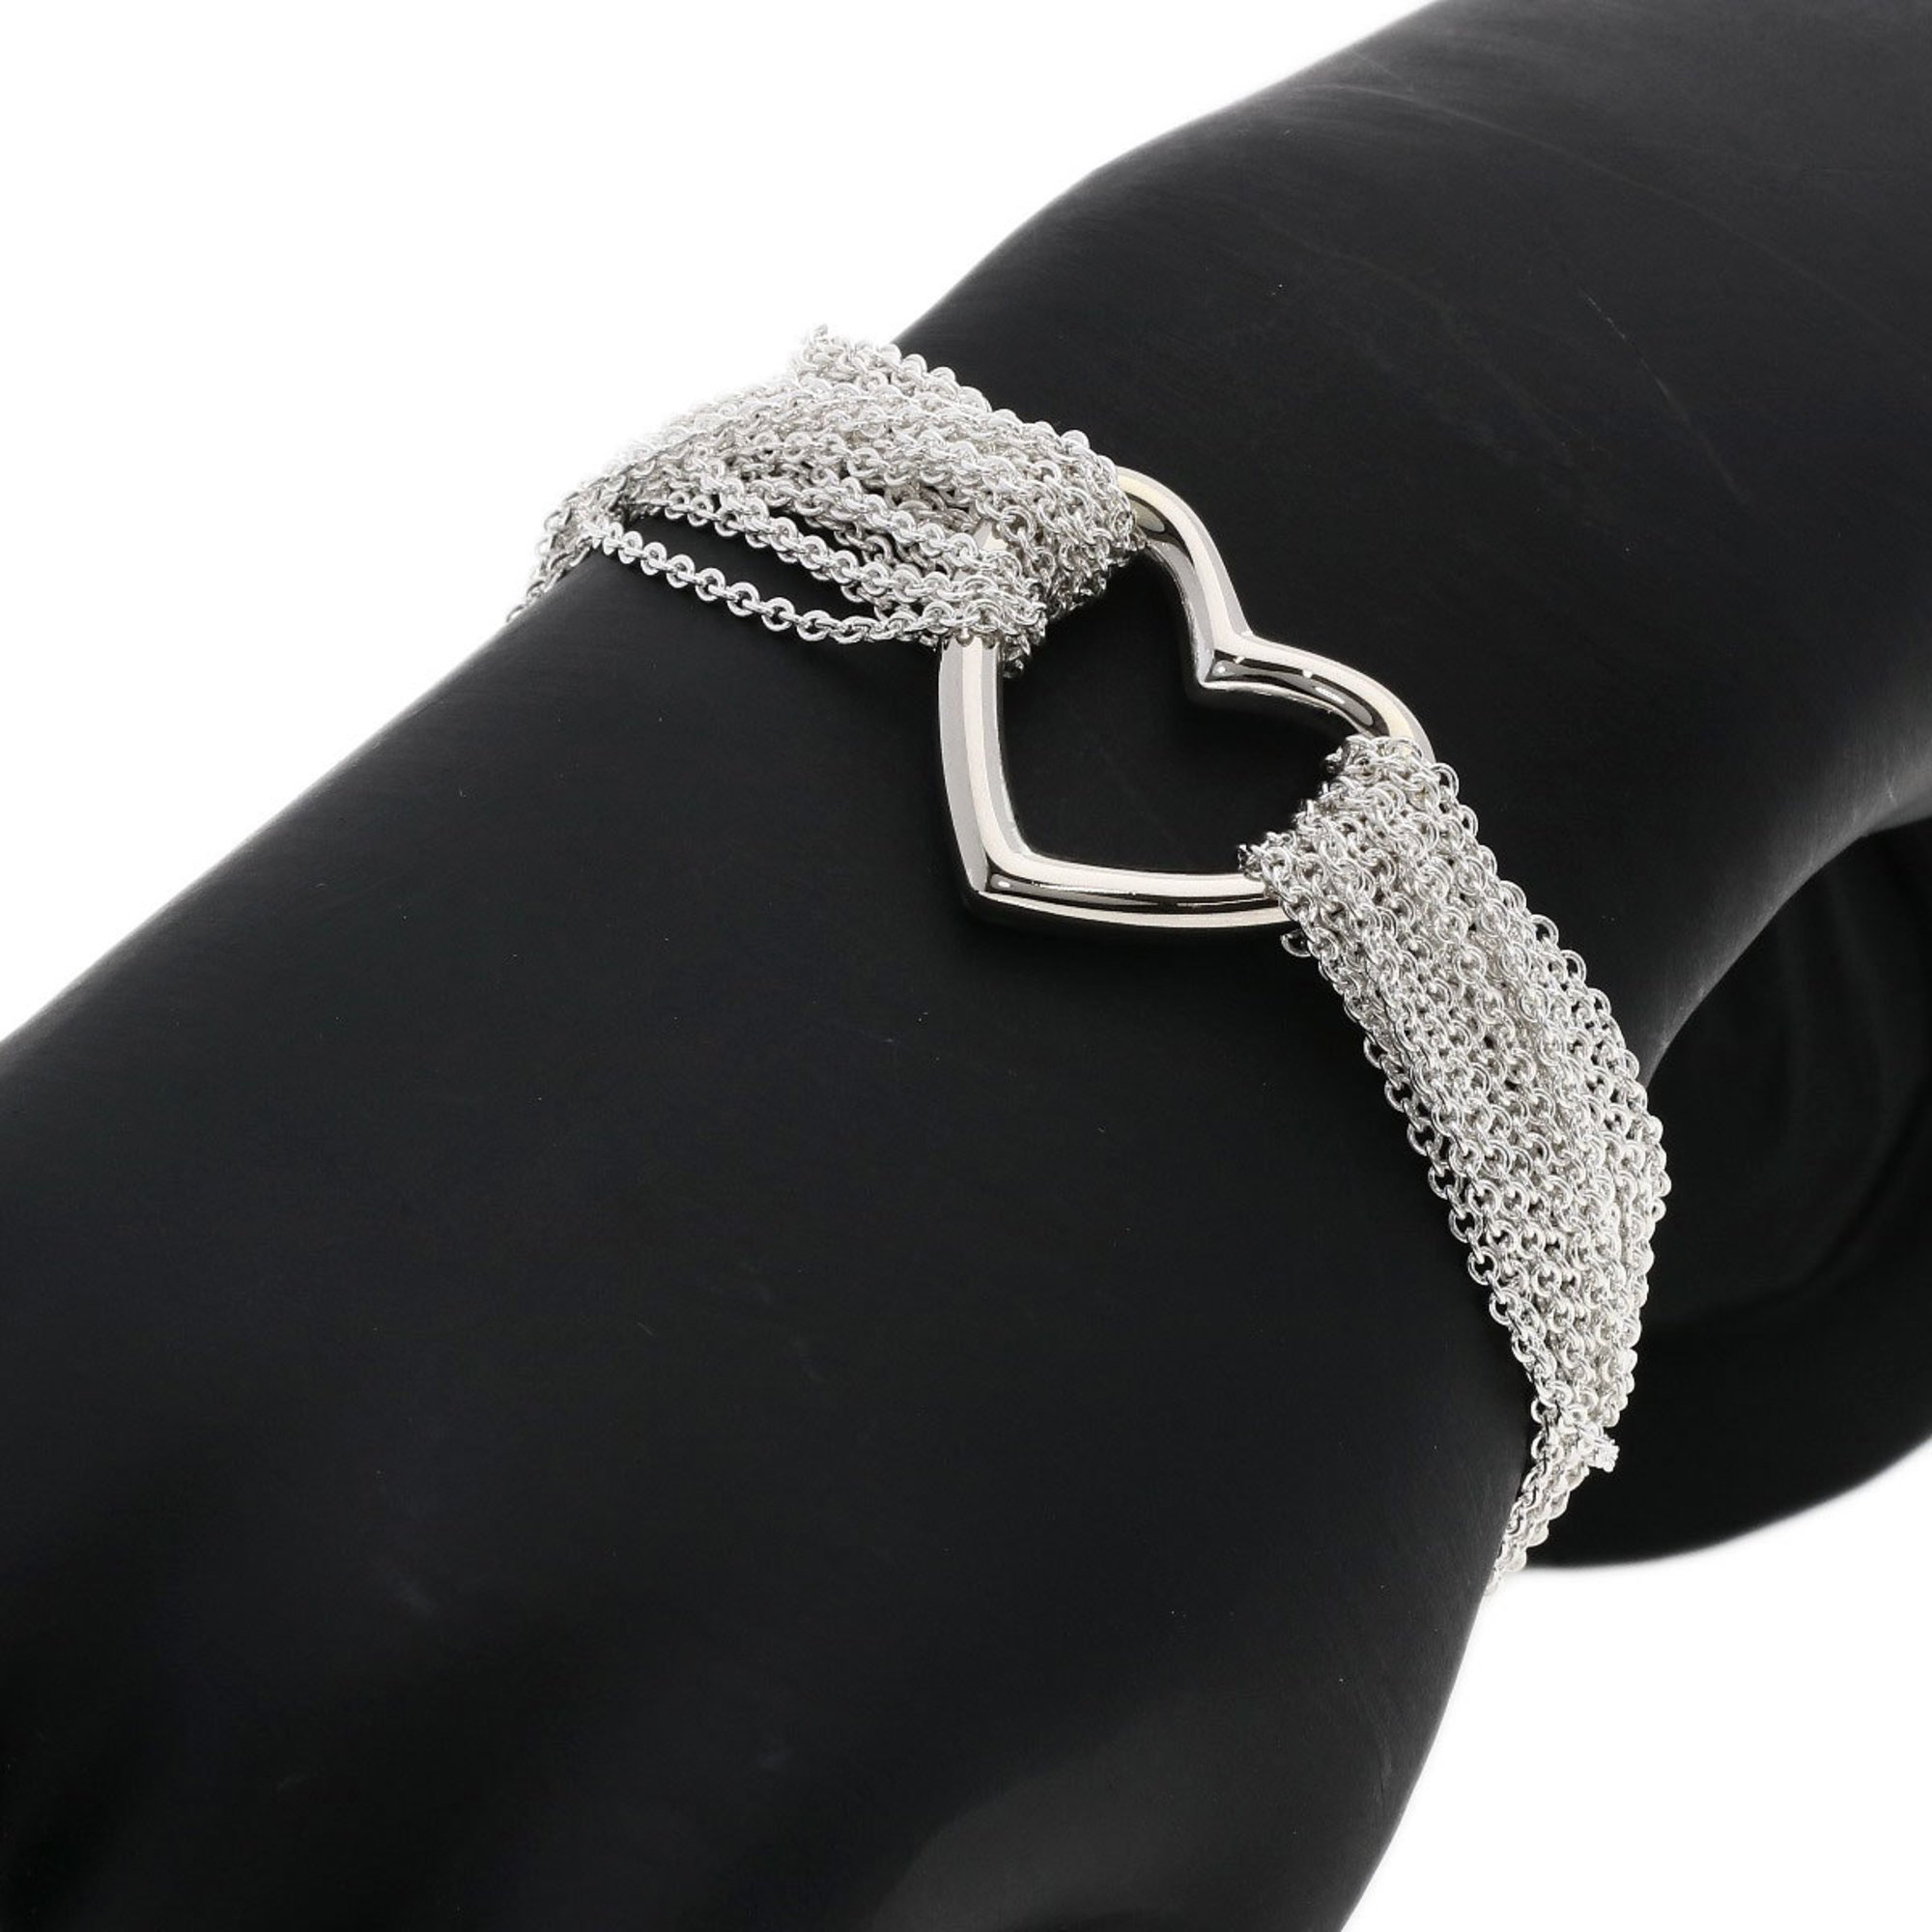 Tiffany Heart Toggle Chain Bracelet Silver Women's